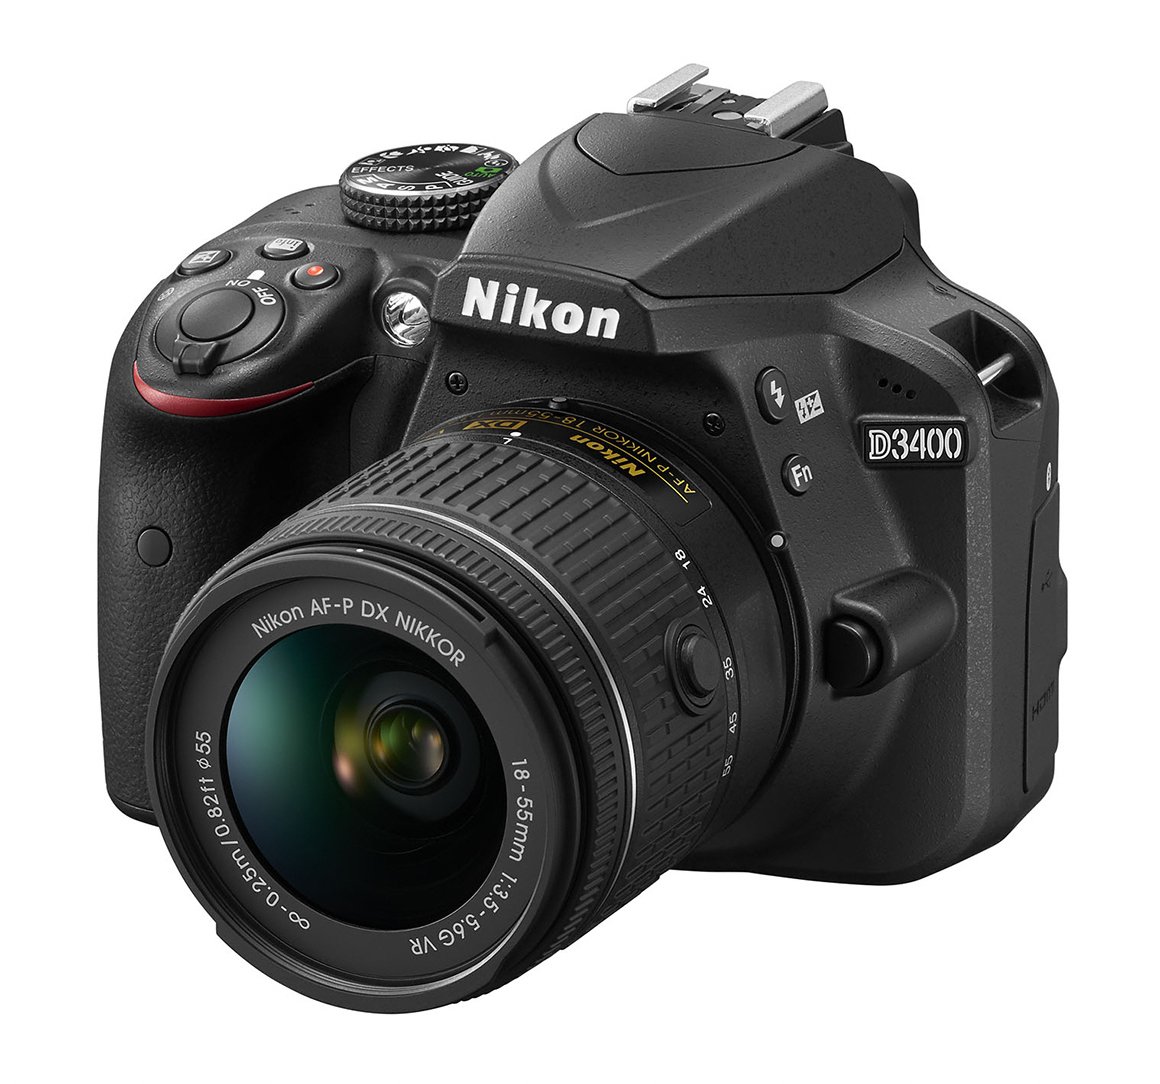 Nikon stoppt Produktion von SLR-Kameras